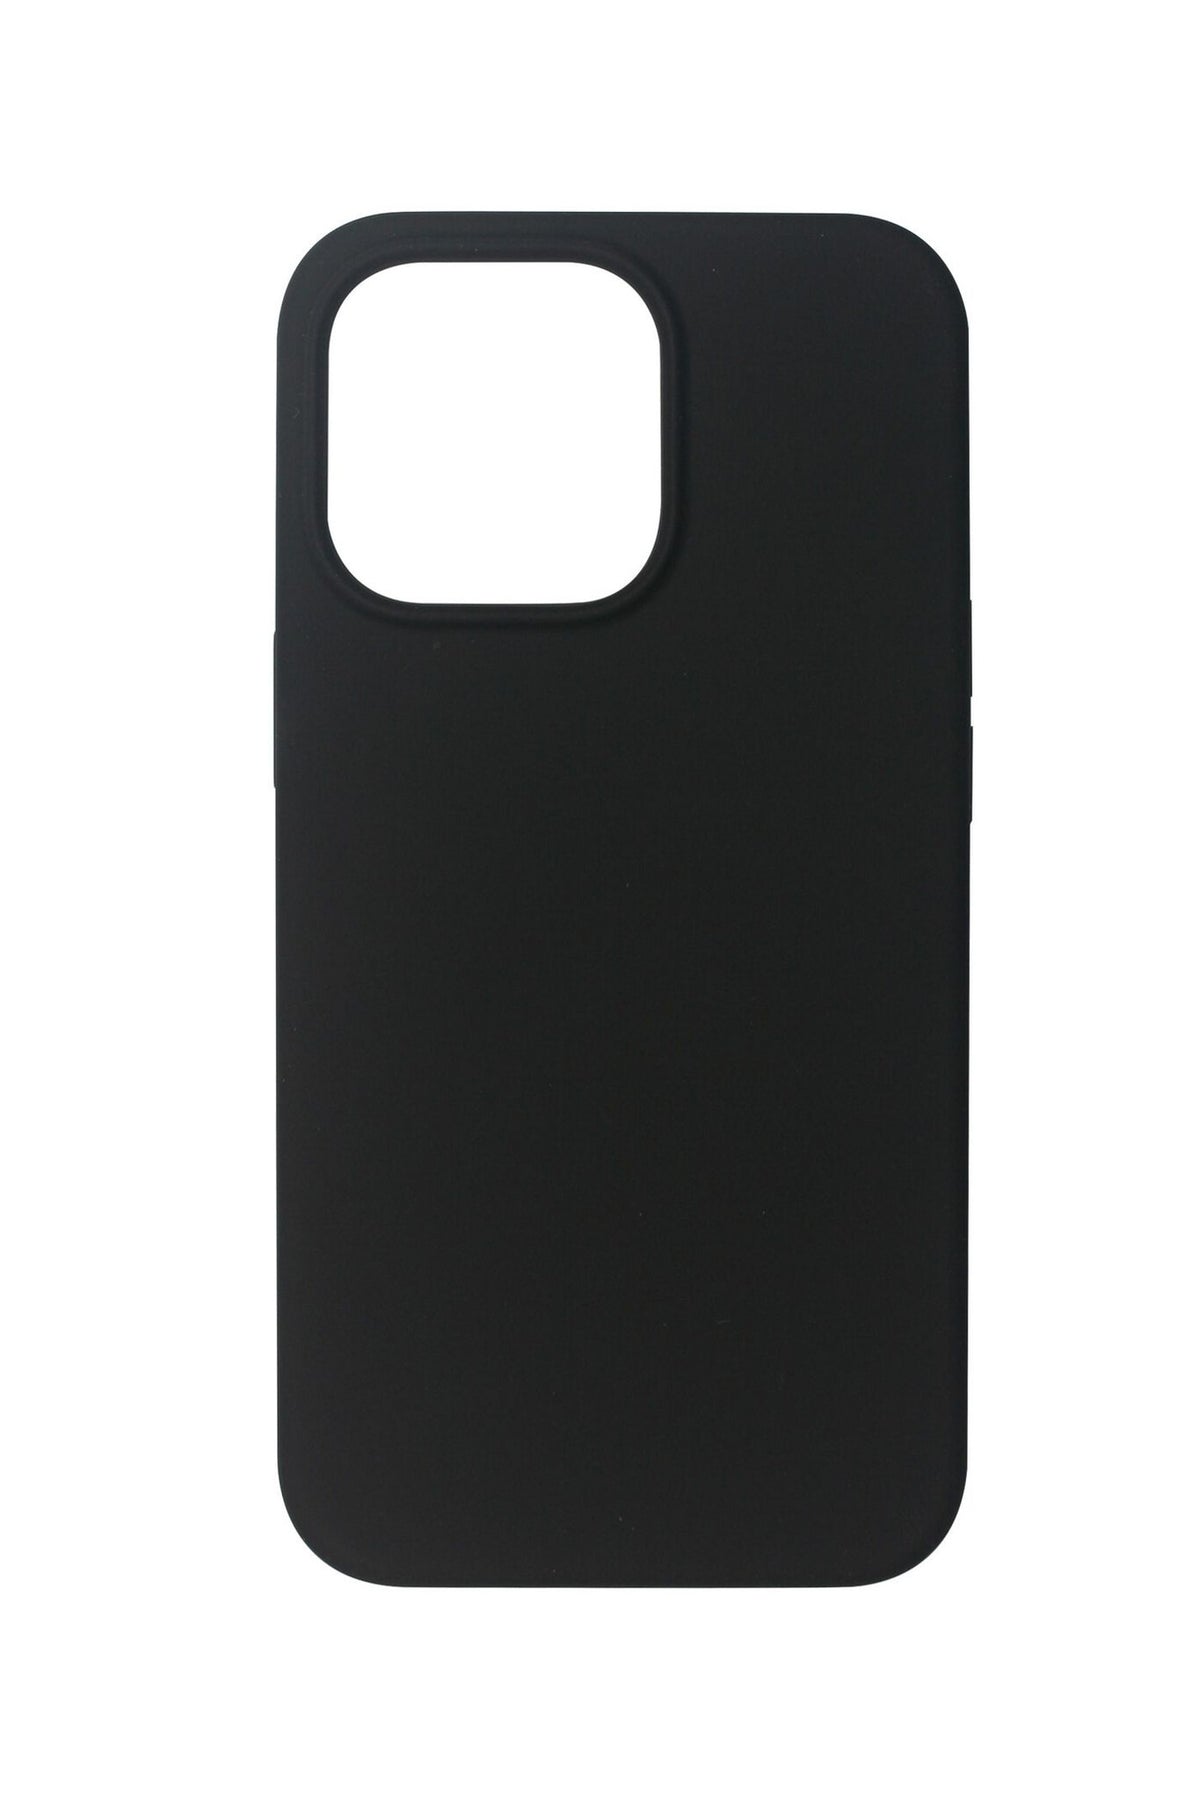 eSTUFF MADRID mobile phone case for iPhone 13 Pro Max in Black